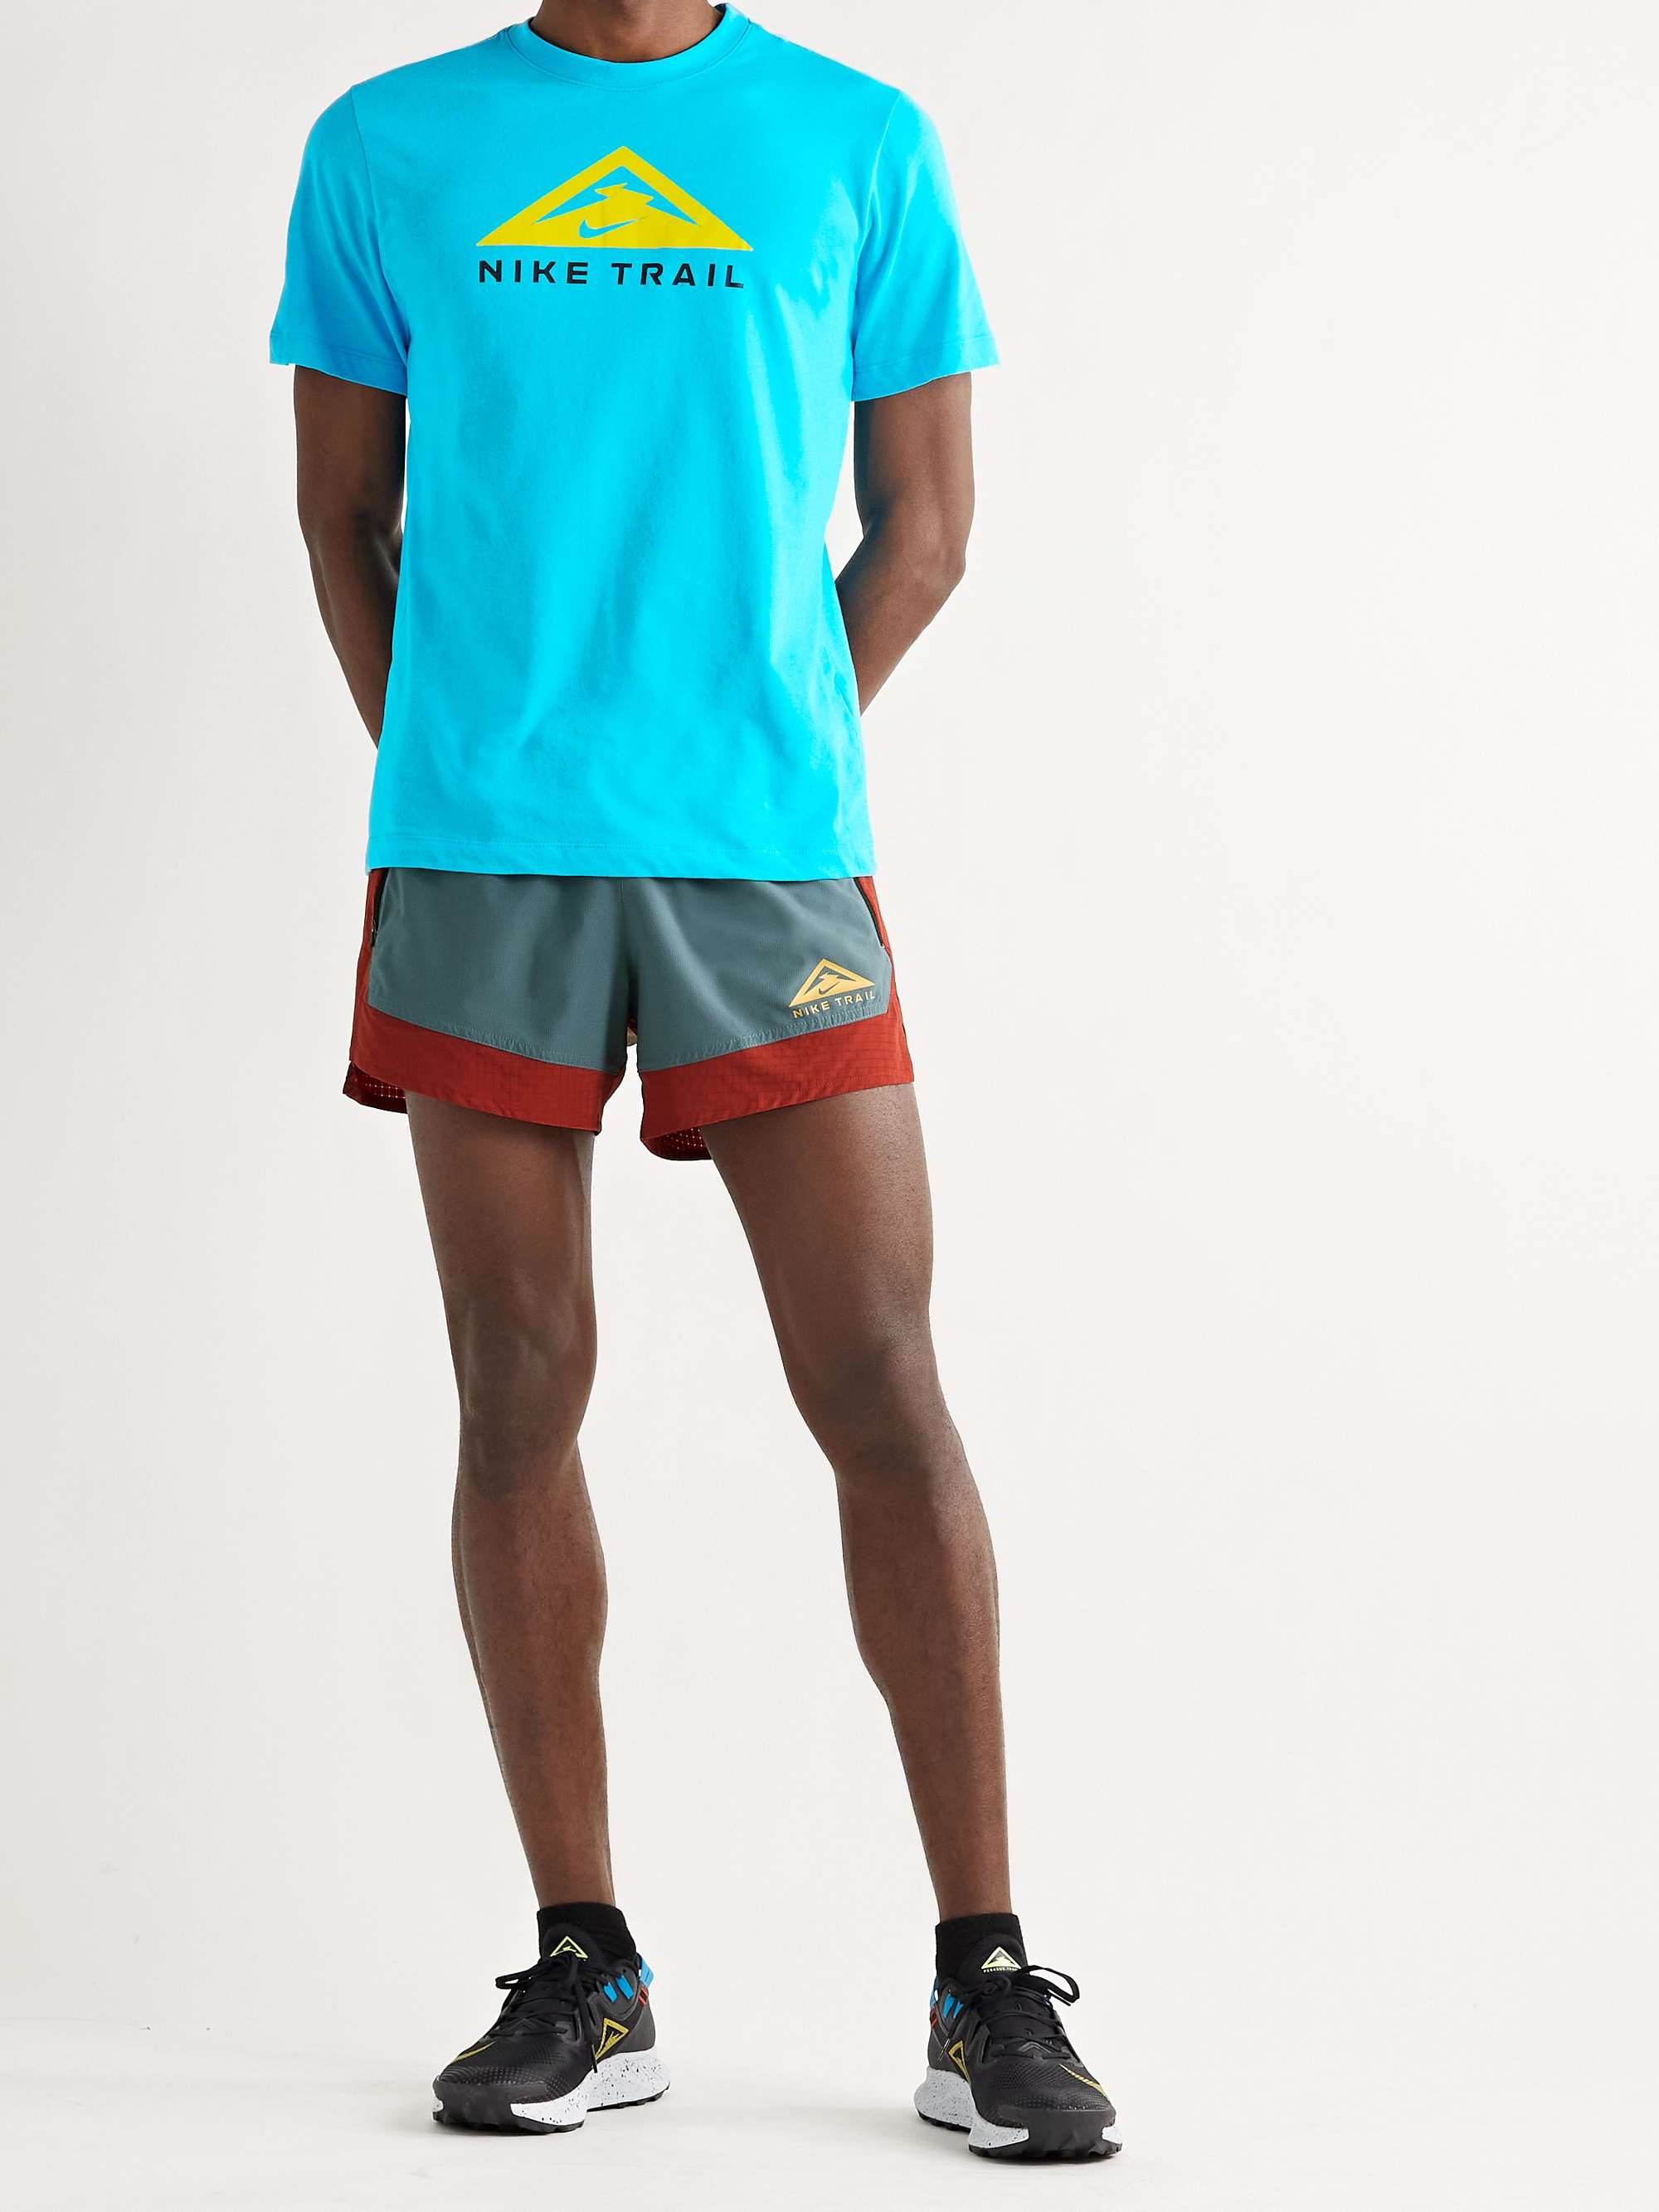 NIKE RUNNING Trail Logo-Print Dri-FIT Cotton-Blend Jersey T-Shirt